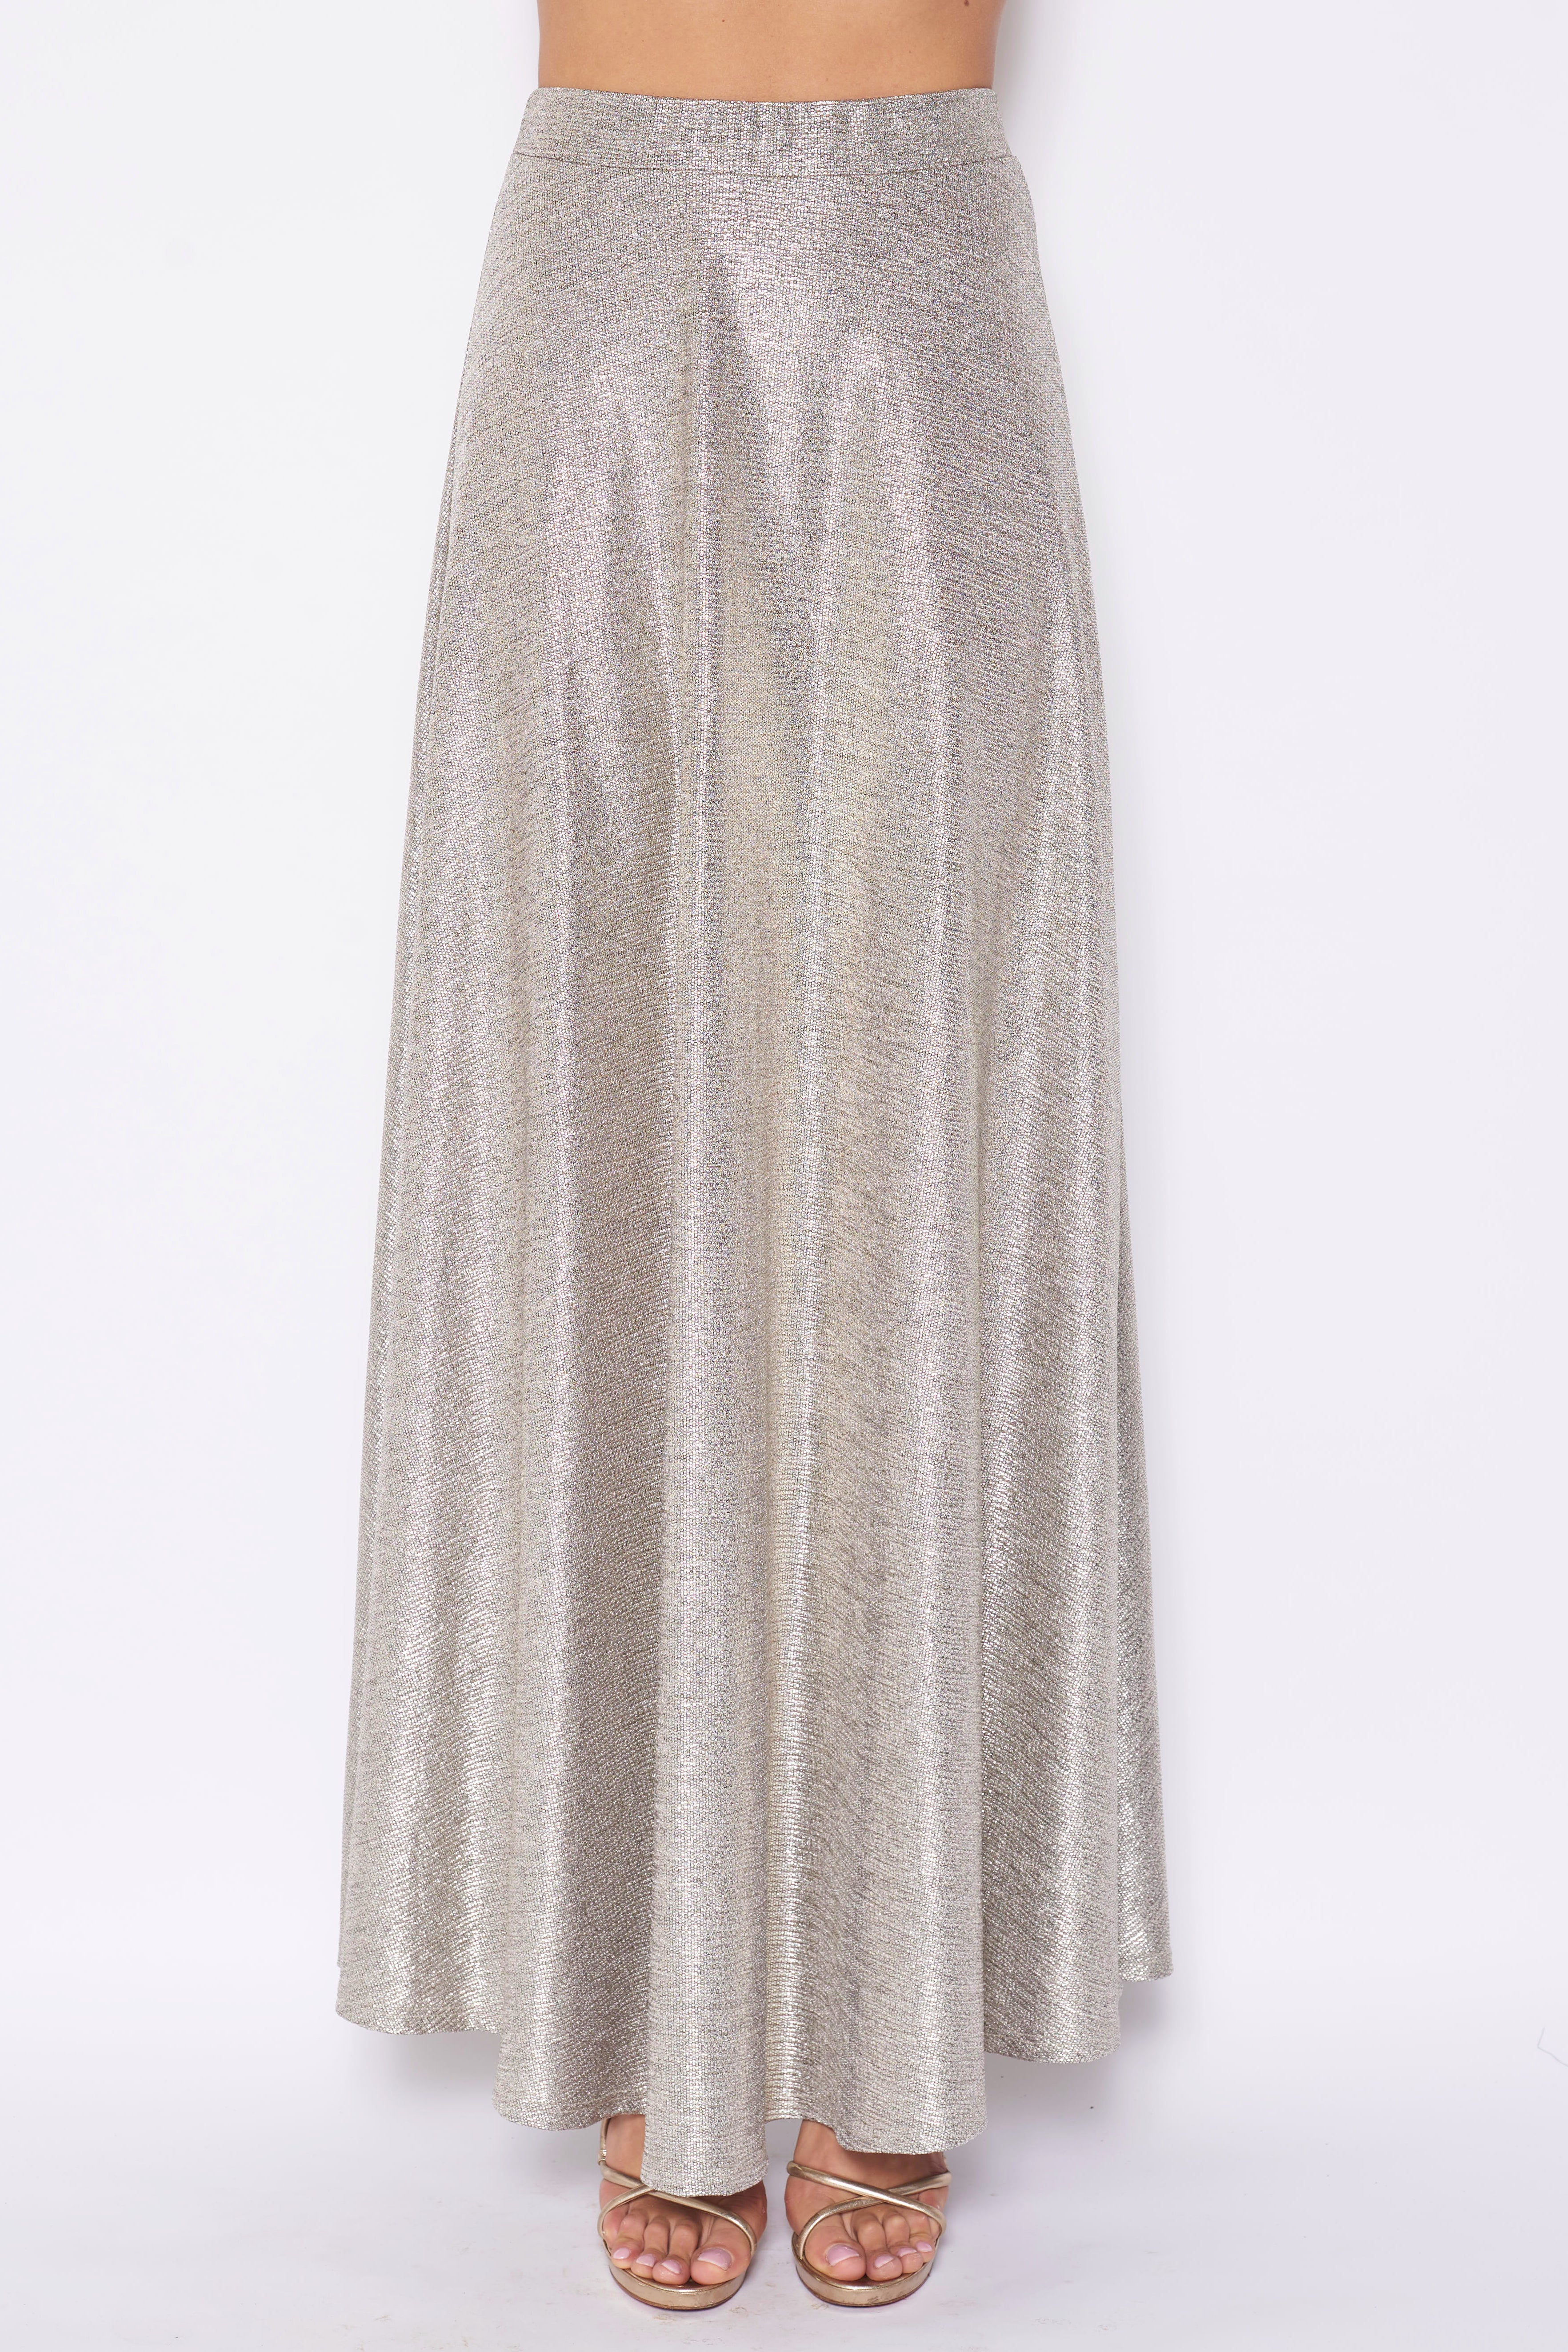 TOSCA - long skirt in gold lurex